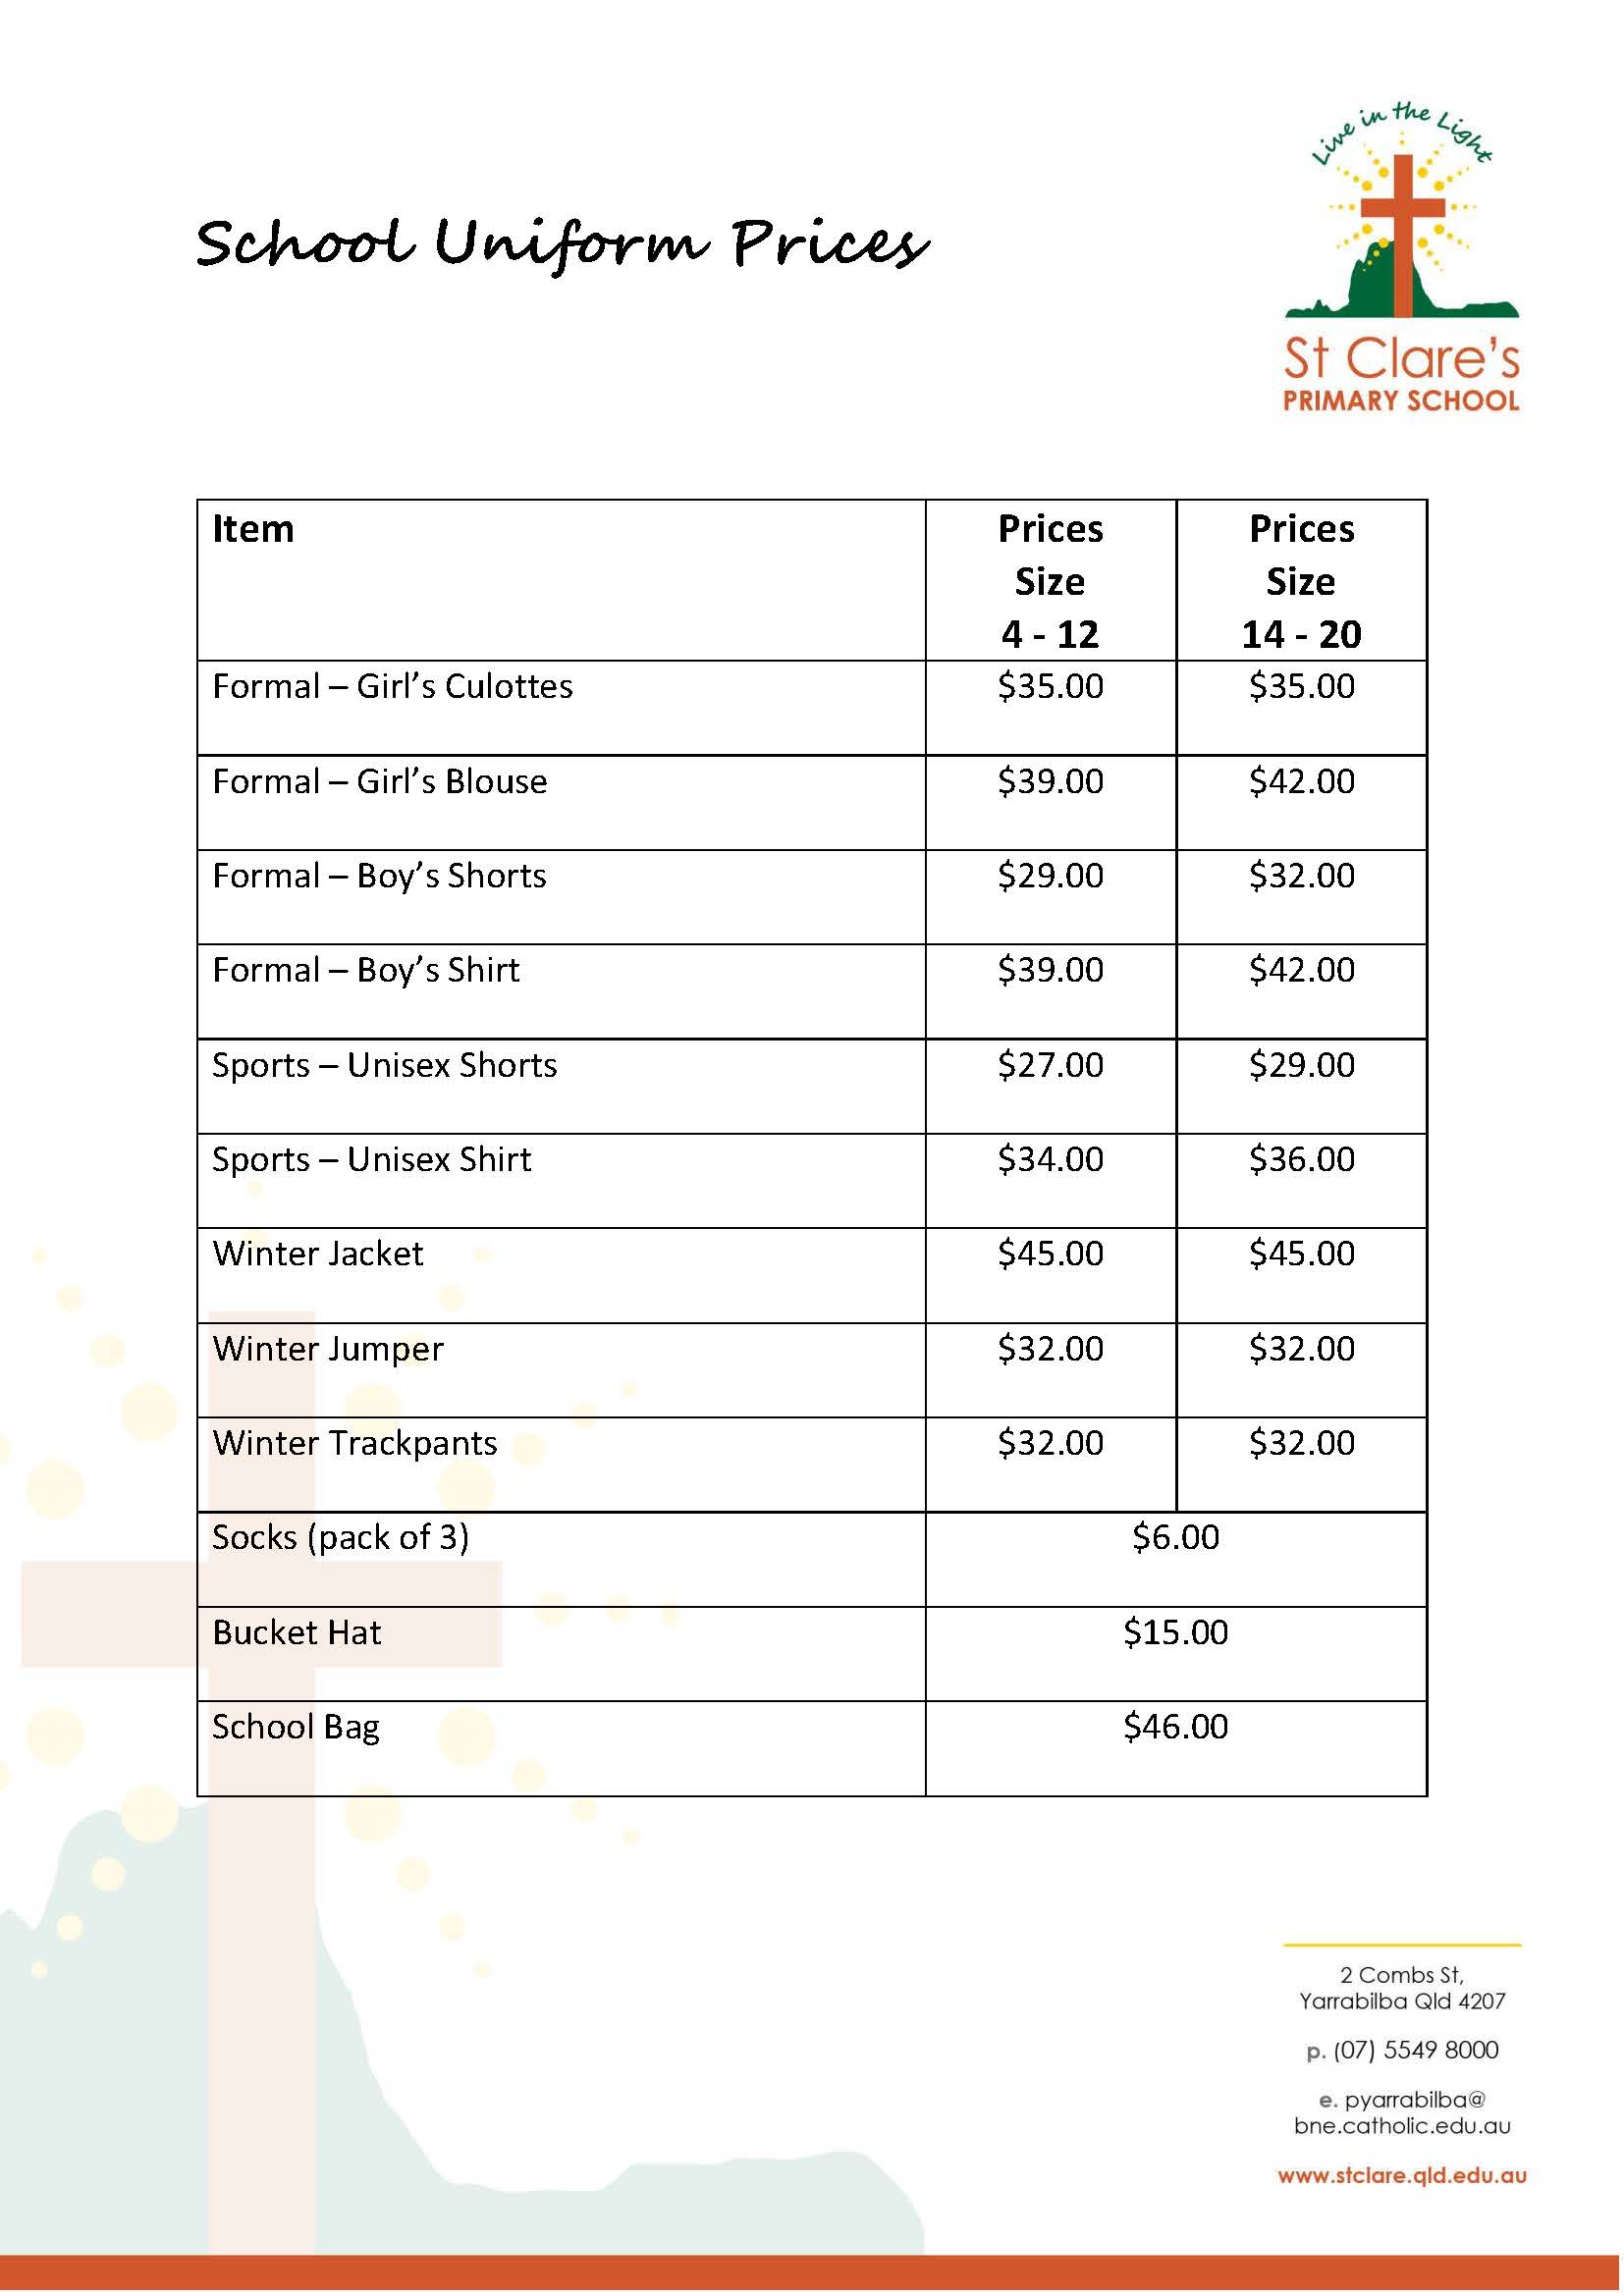 St Clare's Price List 2021_Page_1.jpg